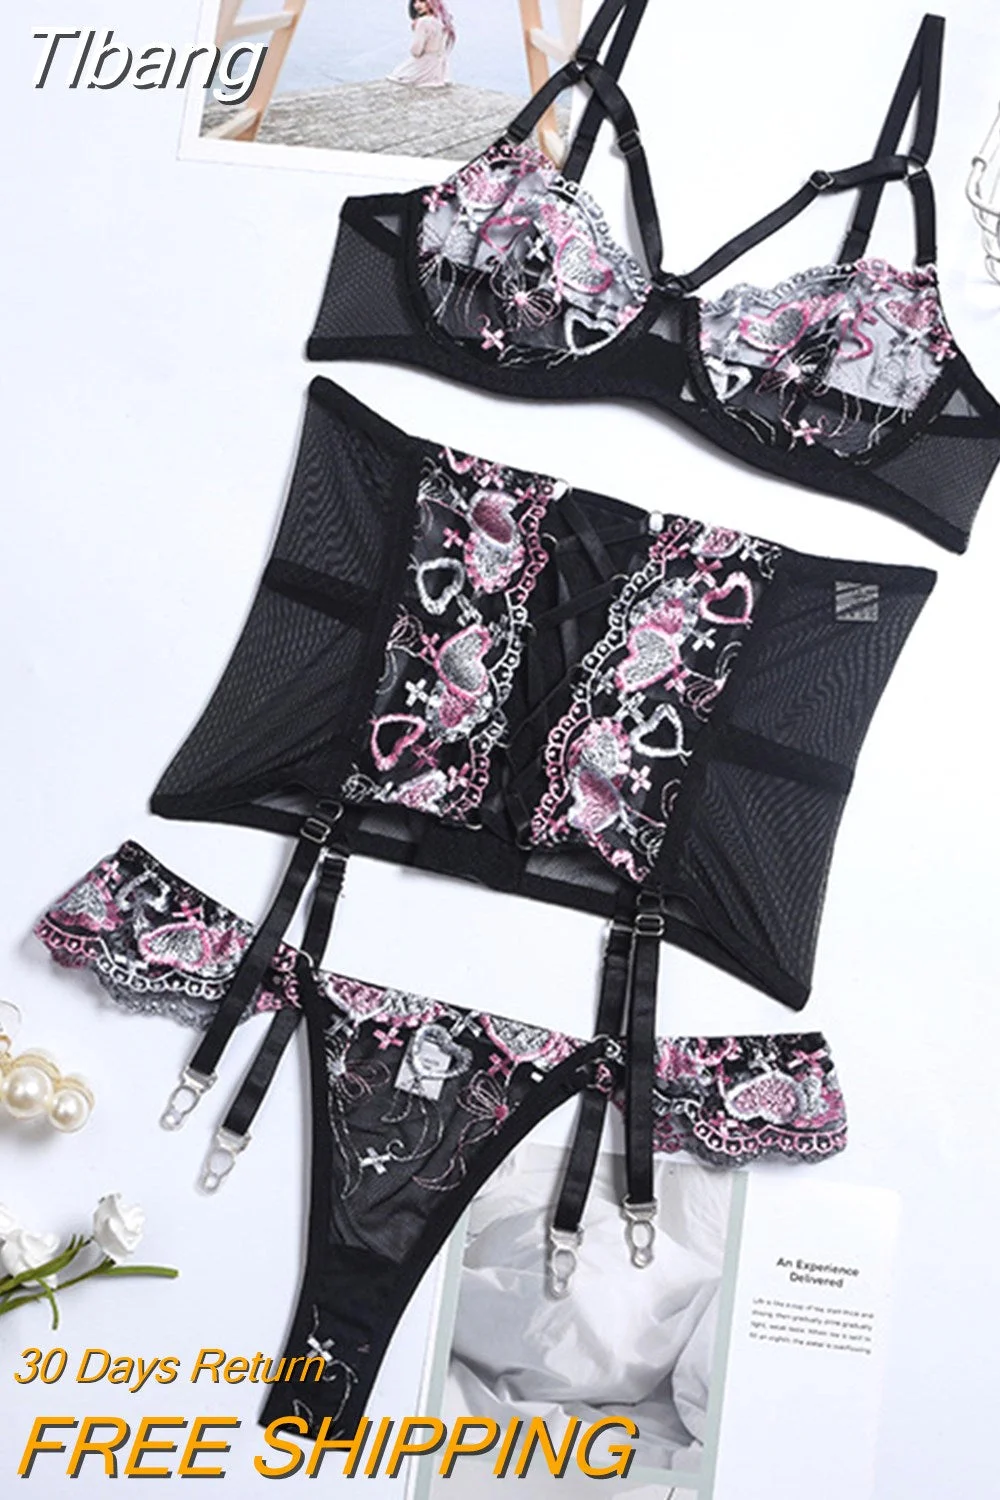 Tlbang Sensual Lingerie Woman Erotic Women's Underwear Fancy Bra with Bones Brief Sets Bandage Waistband Sexy Bilizna Set